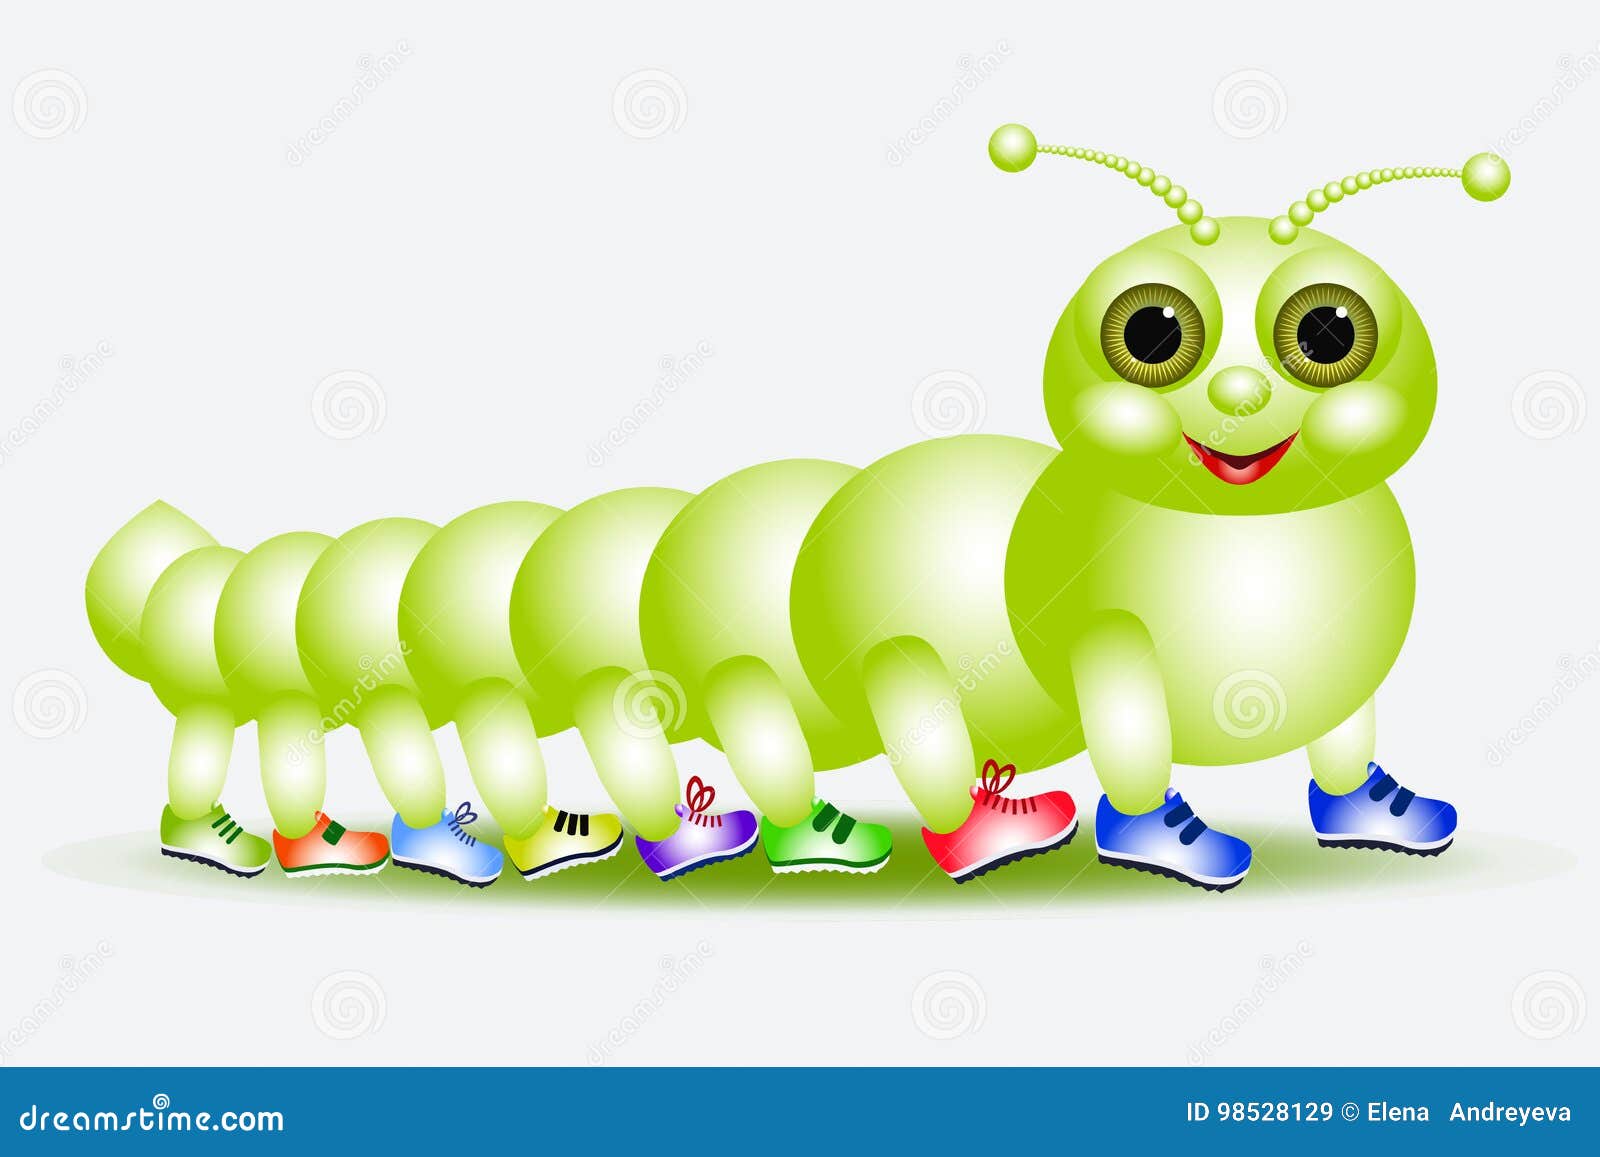 A Centipede In Miscellaneous Footwear 